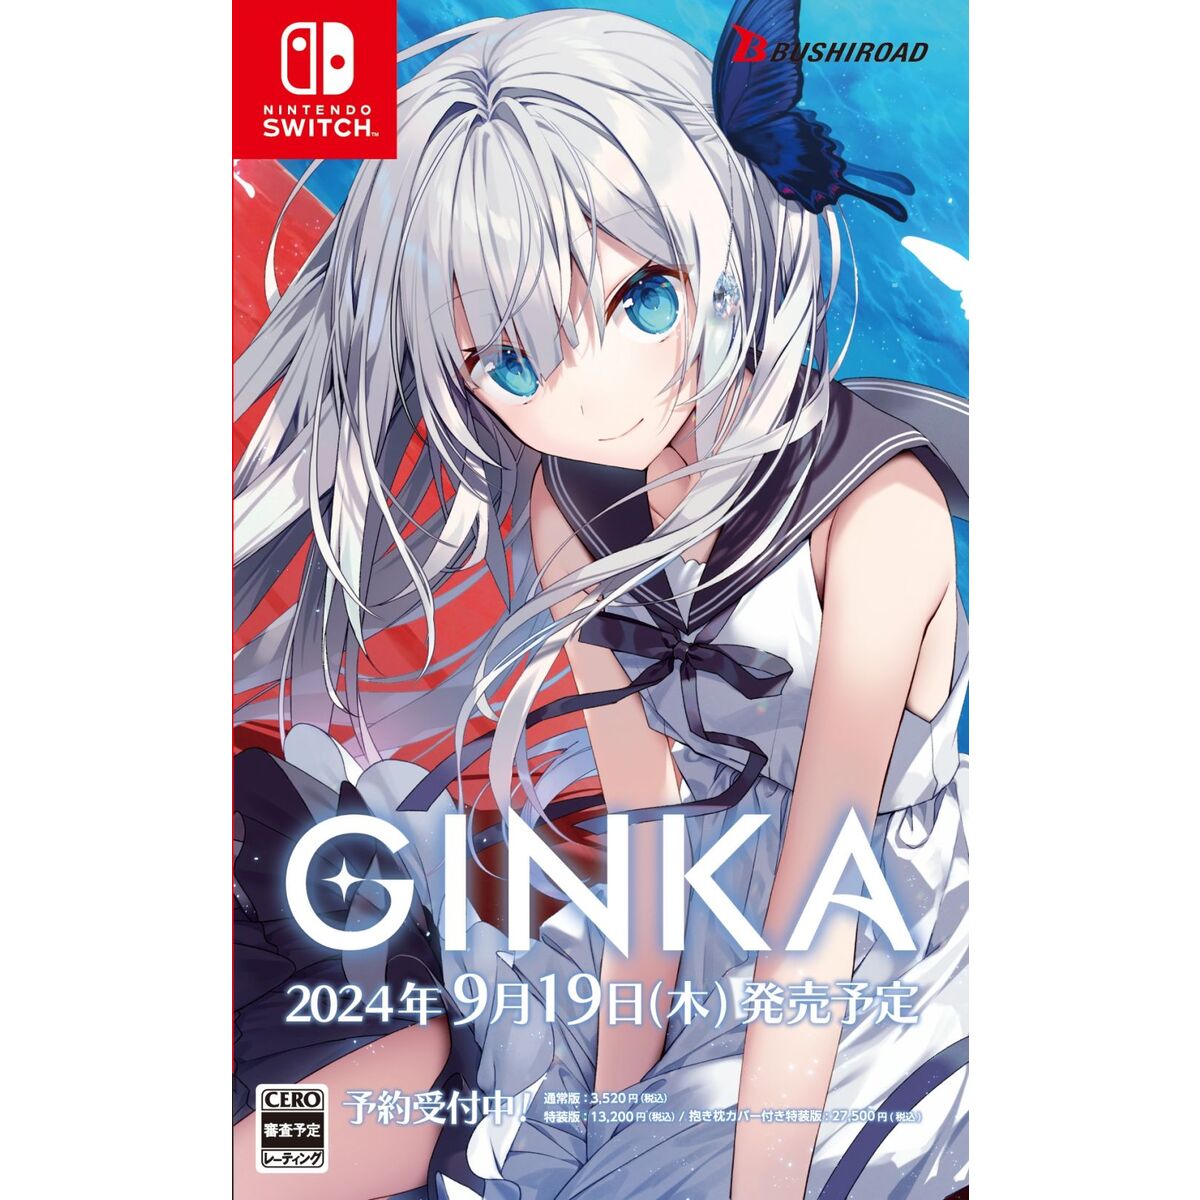 Nintendo Switch GINKA（抱き枕カバー付き特装版) 通販｜セブンネット 